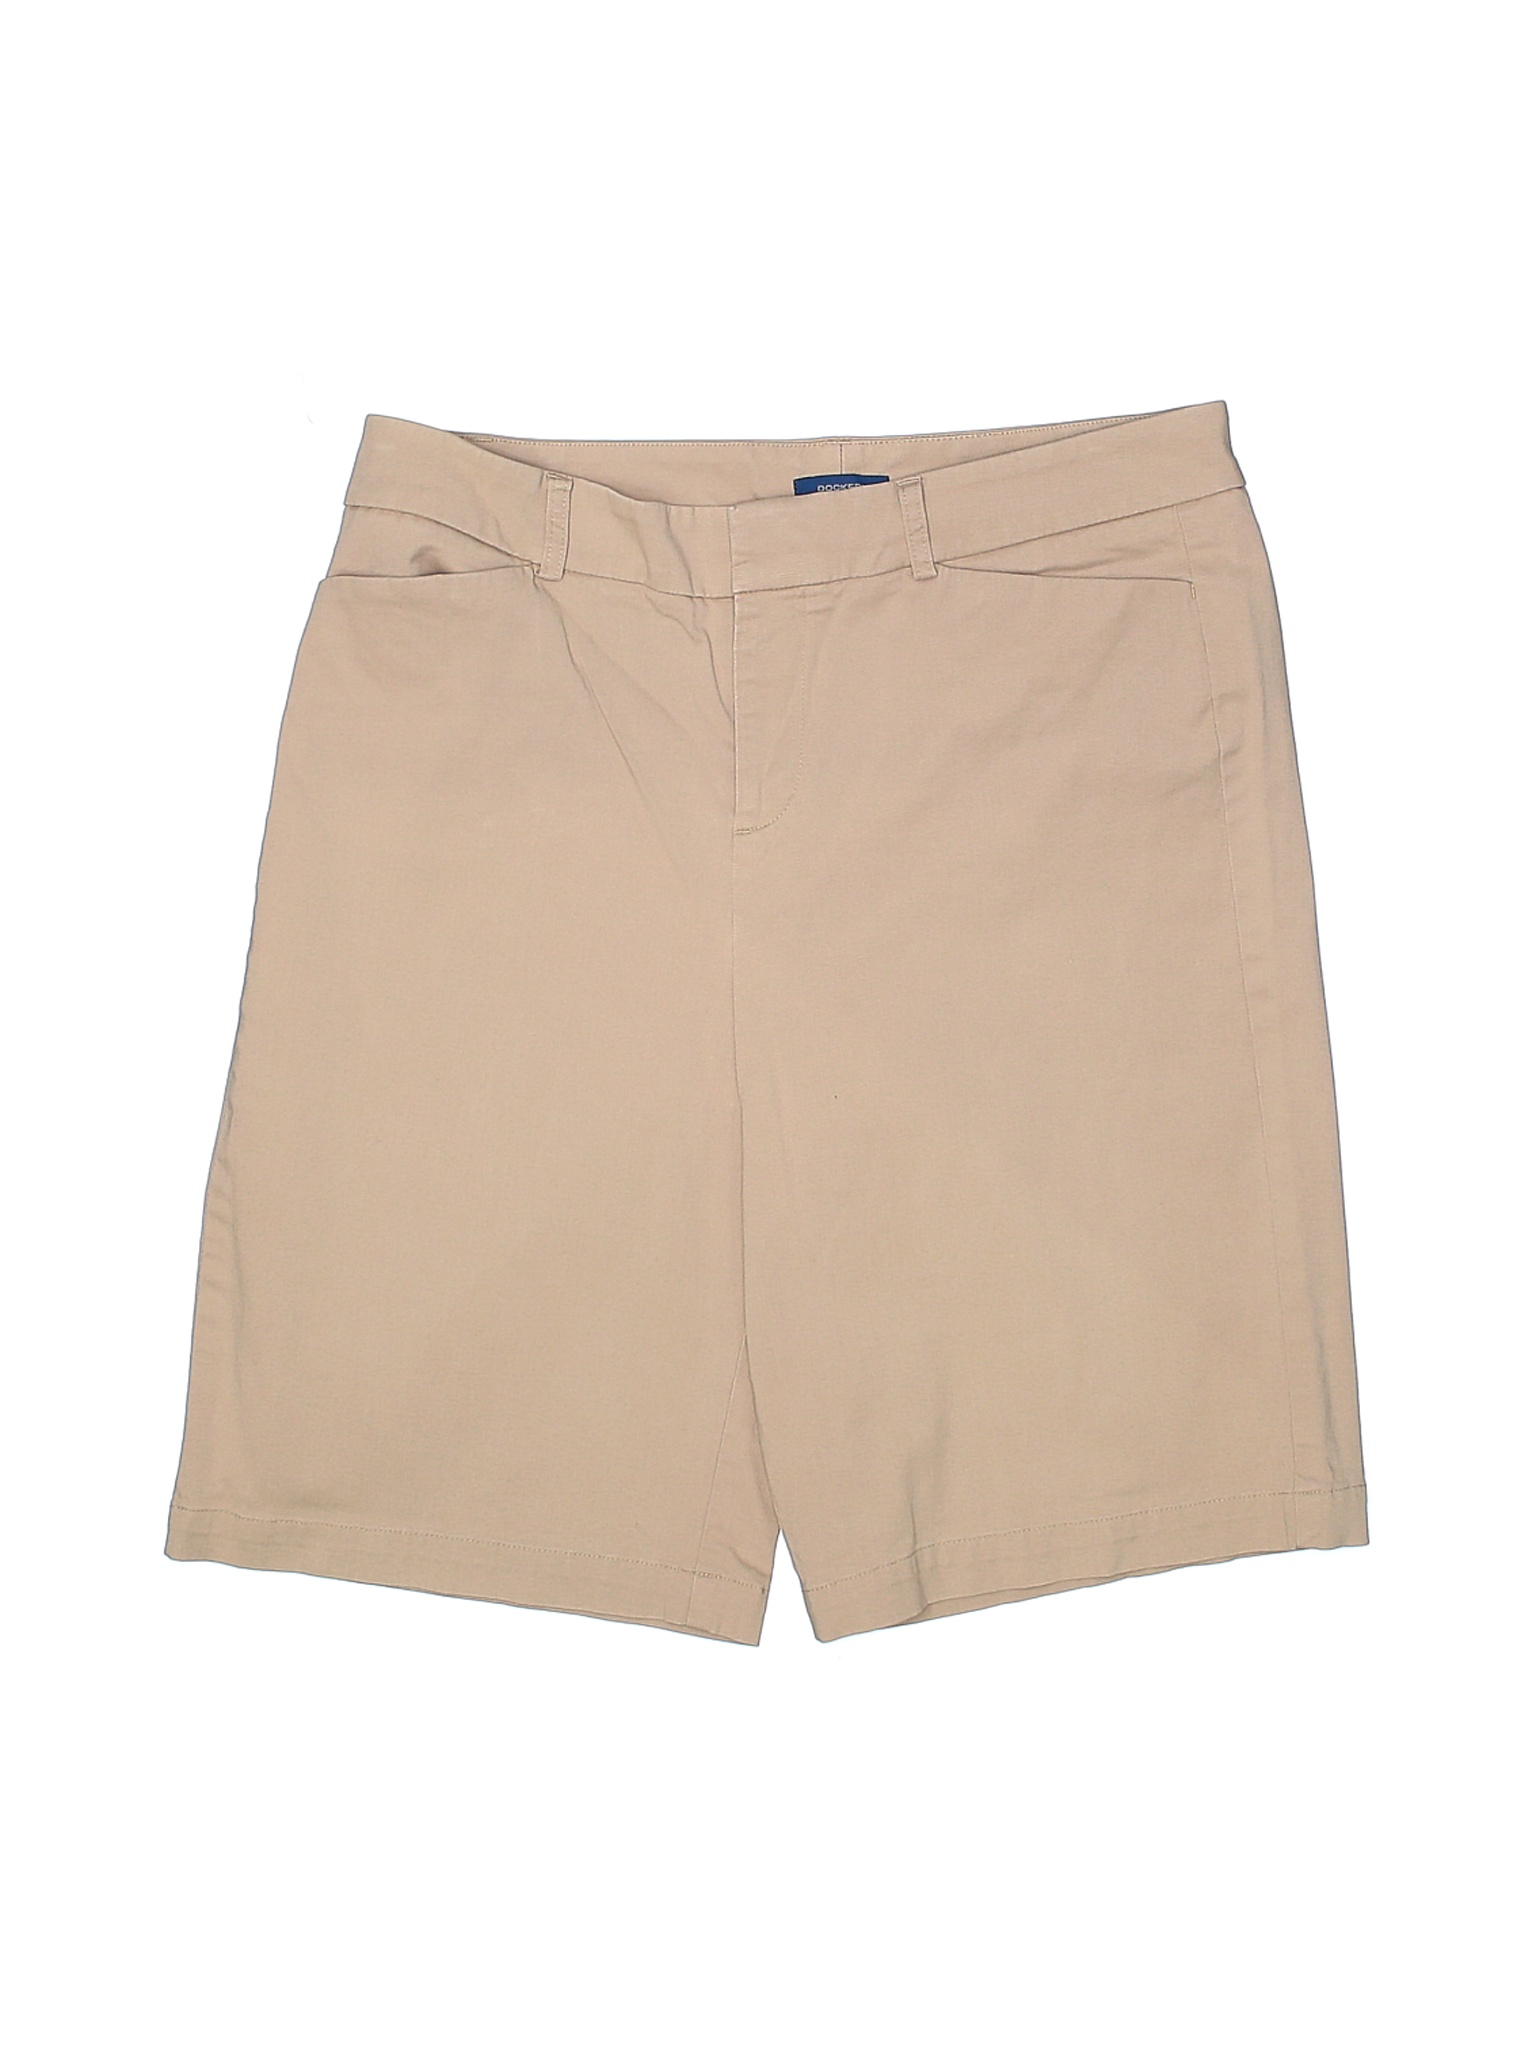 Dockers Women Brown Khaki Shorts 10 | eBay